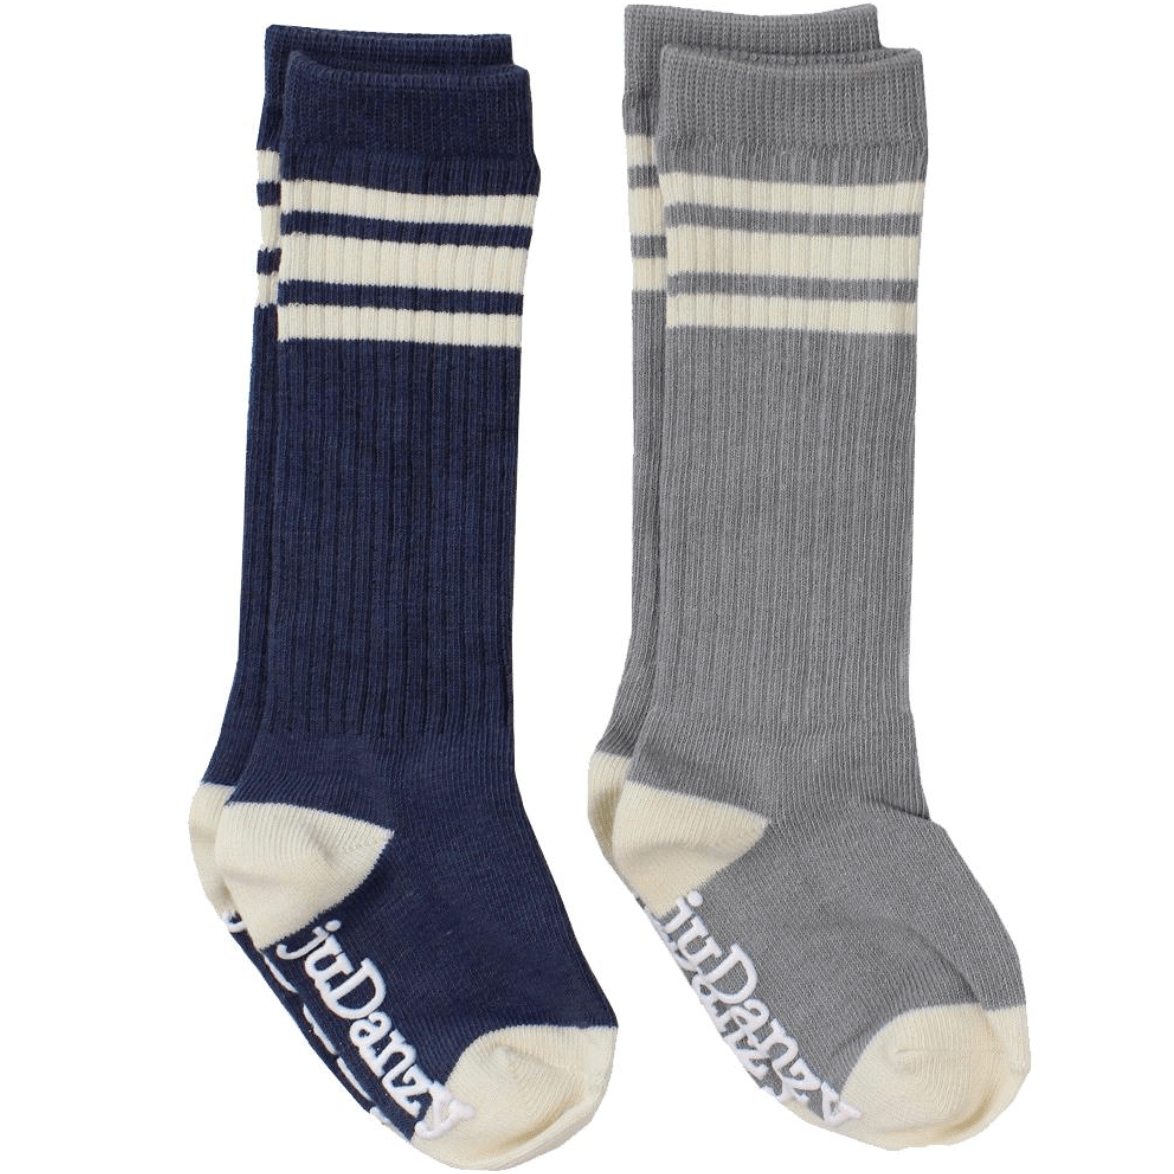 Blue & Grey Tube Socks accessories juDanzy 